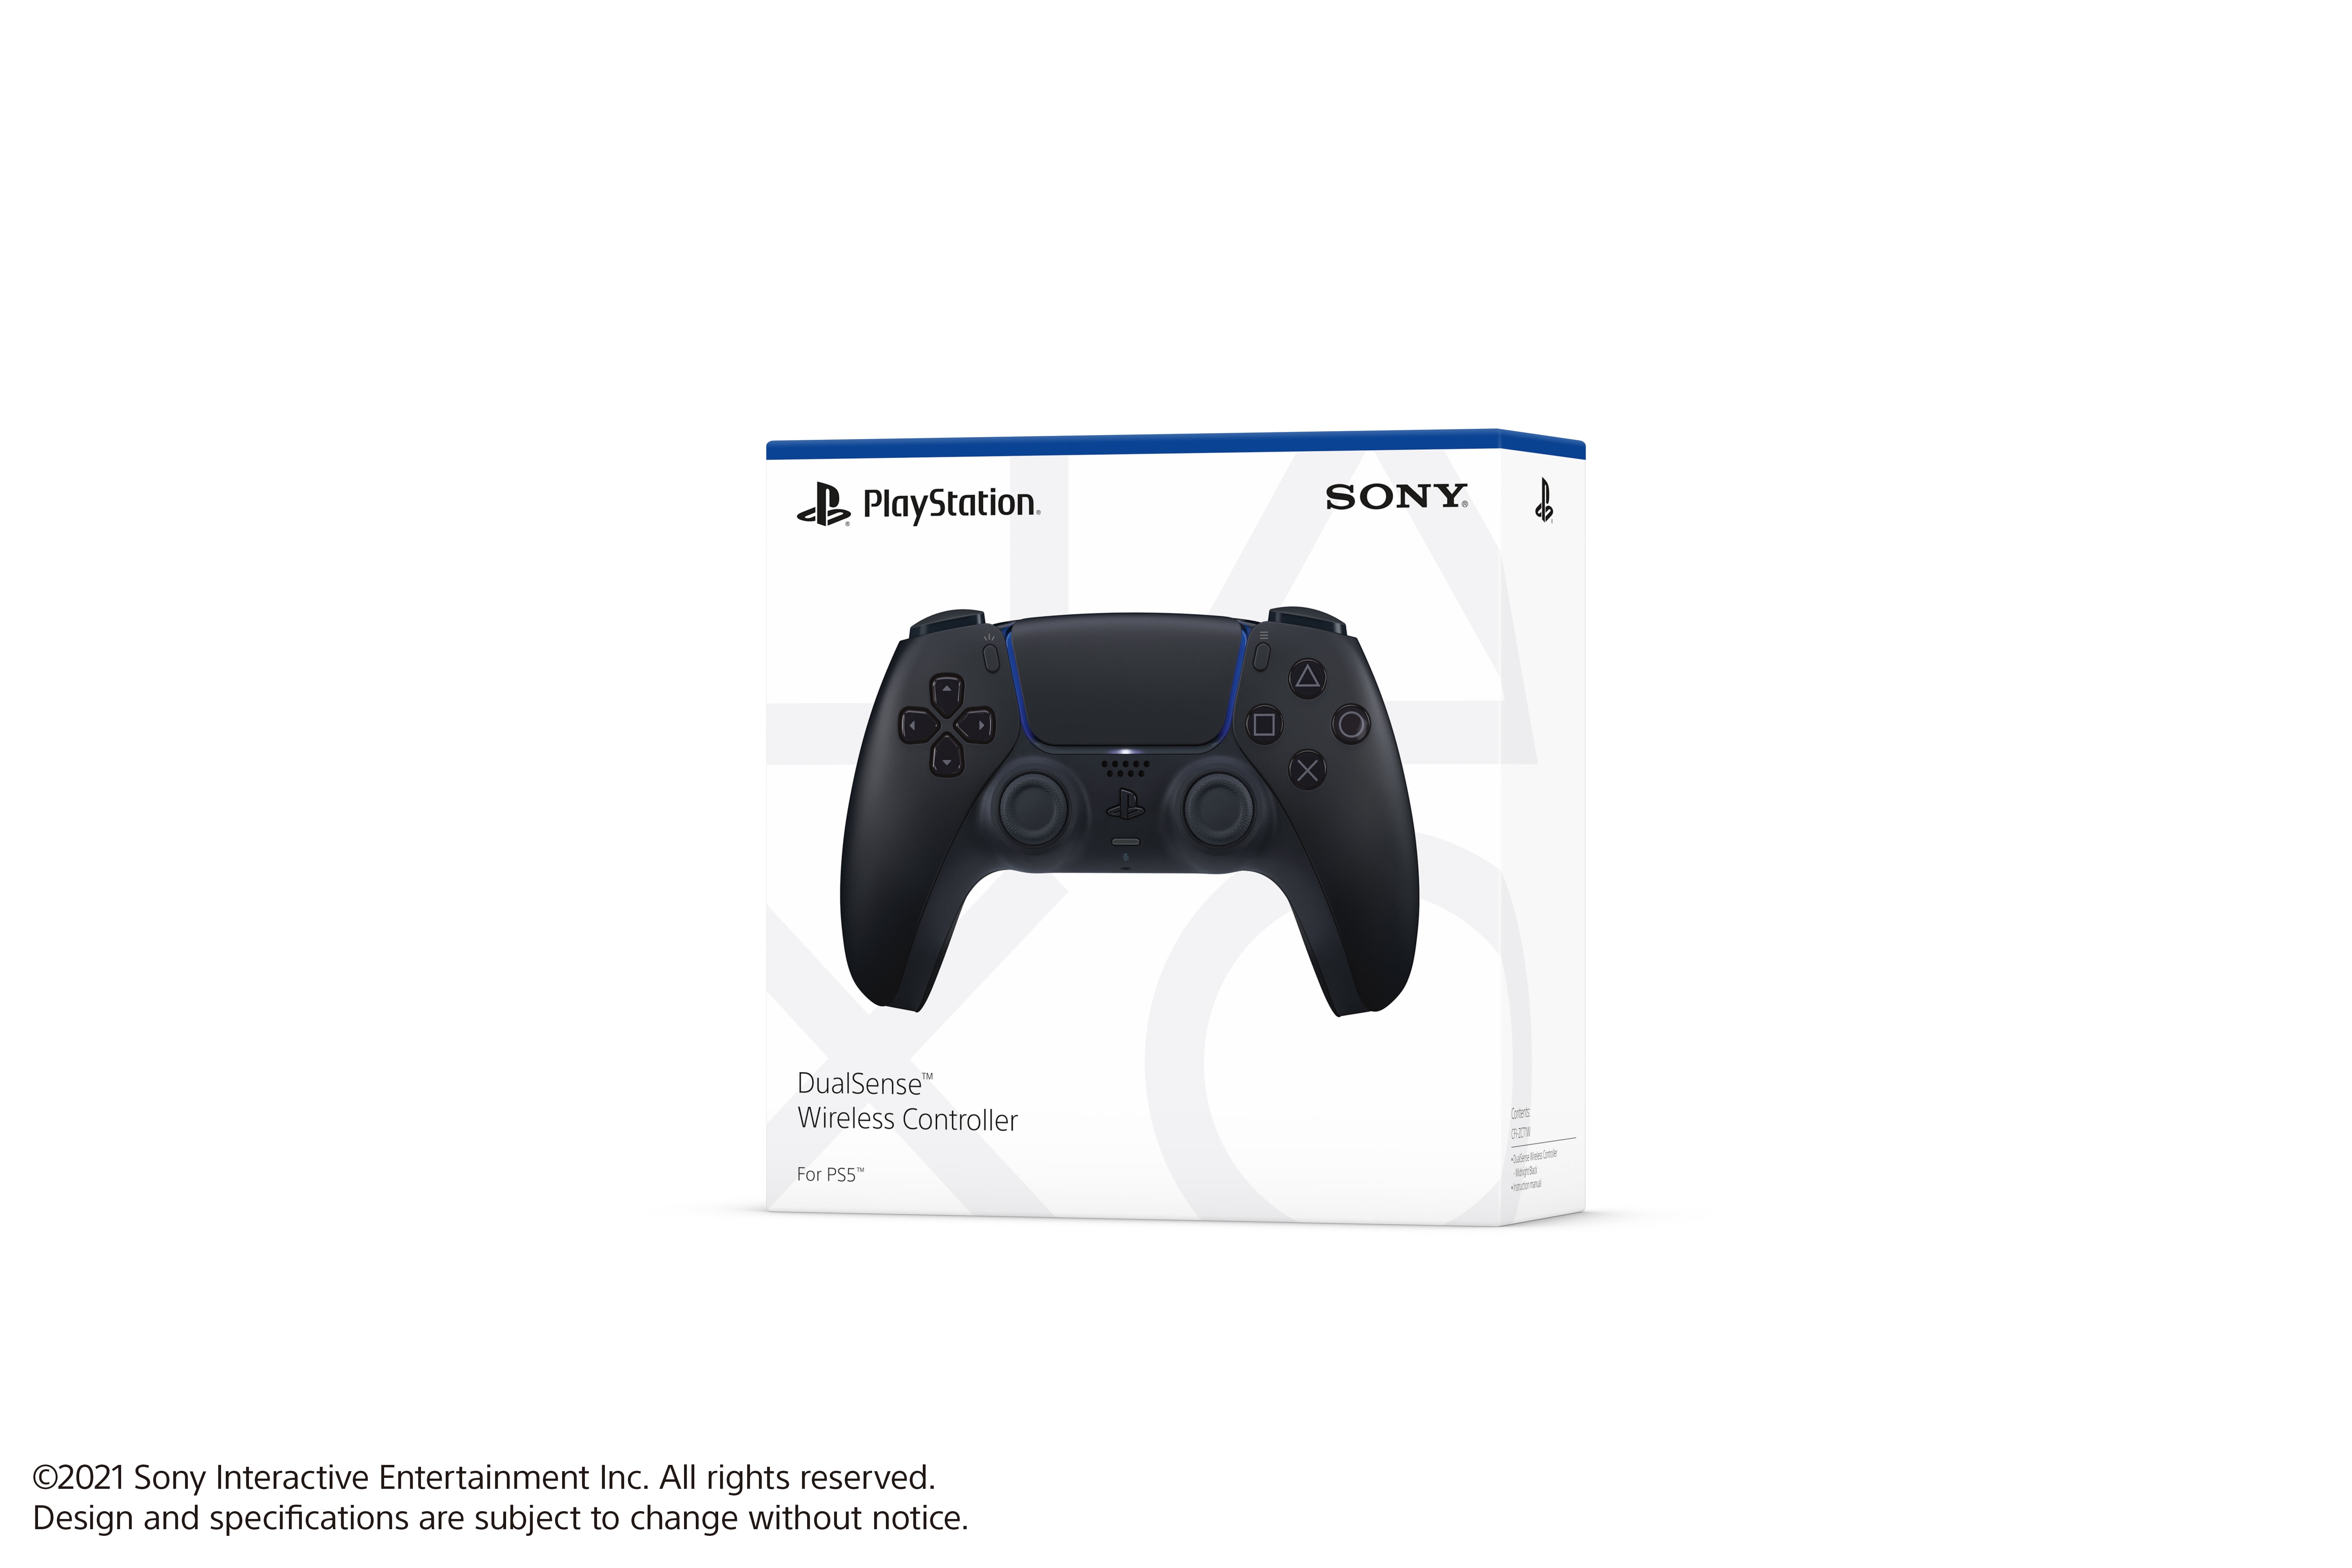 PlayStation 5 Slim Console Marvels Spider-Man 2 Bundle / Extra PlayStation 5  DualSense Wireless Controller 